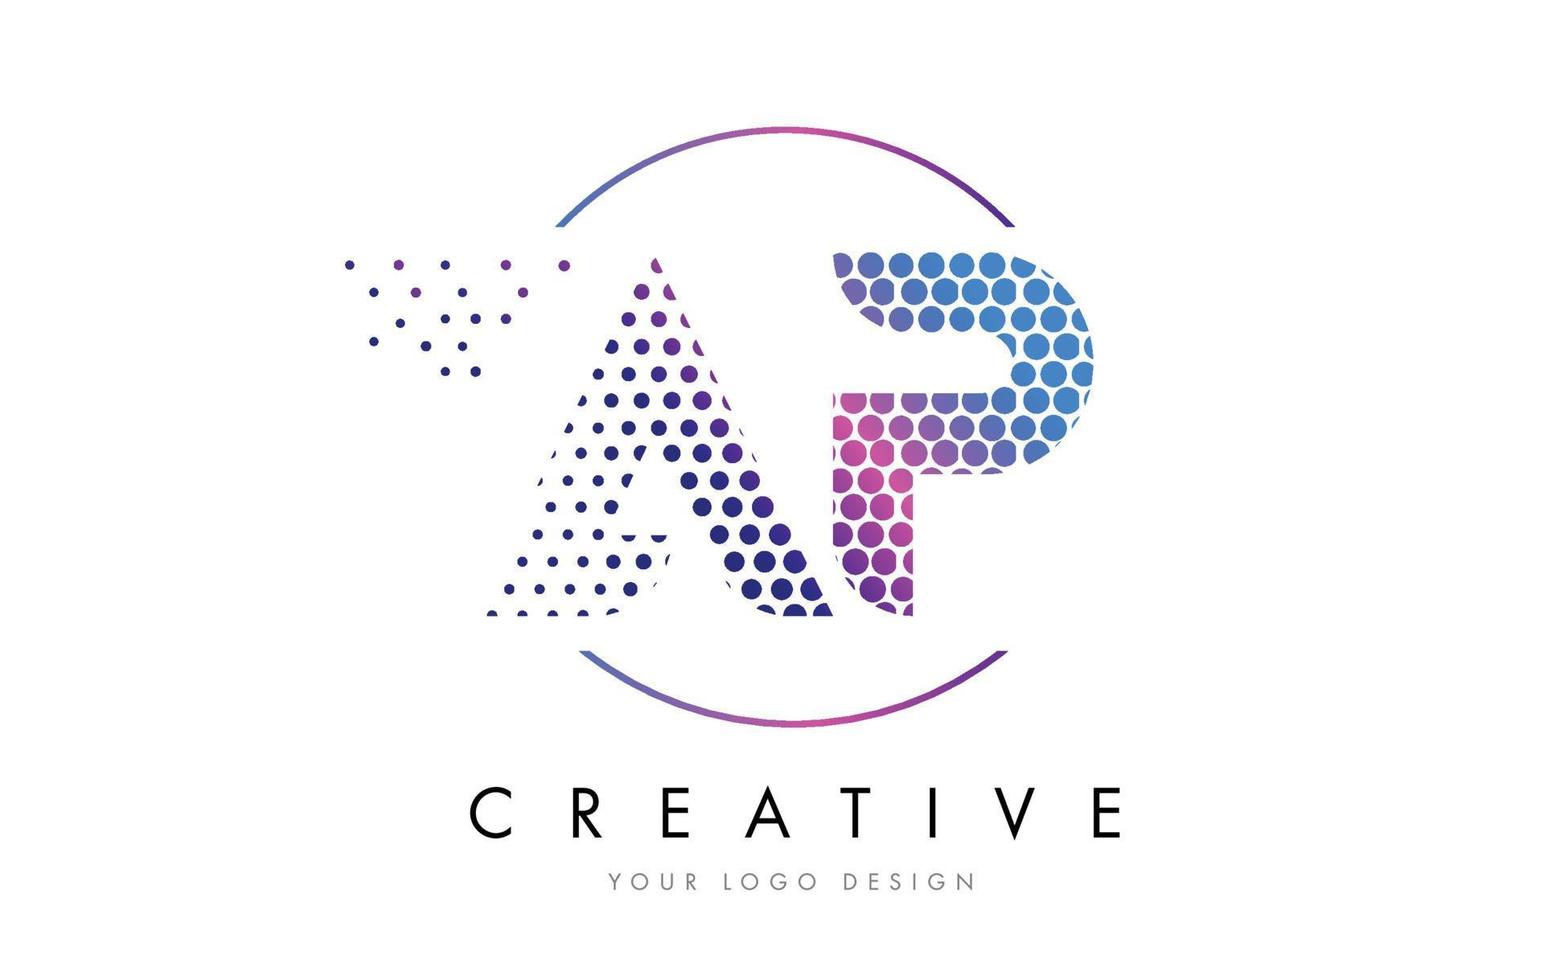 ap ap rosa magenta punteggiato bolla lettera logo design vector